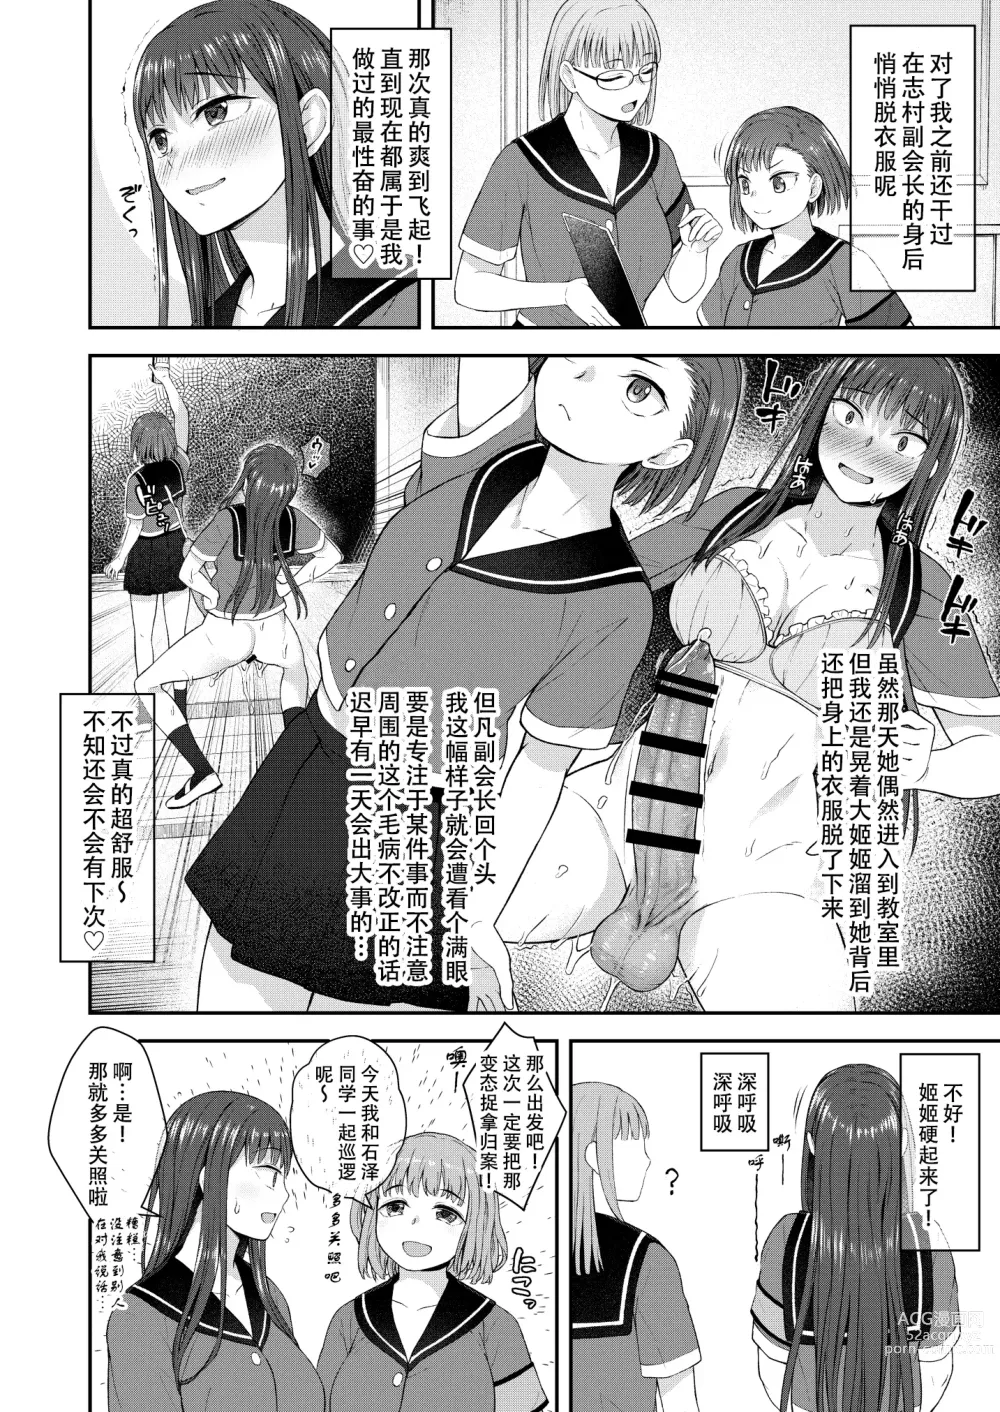 Page 6 of doujinshi 放课后的自拍少女2 那个露出男性性器并且自拍的变态只有她知道其真面目.